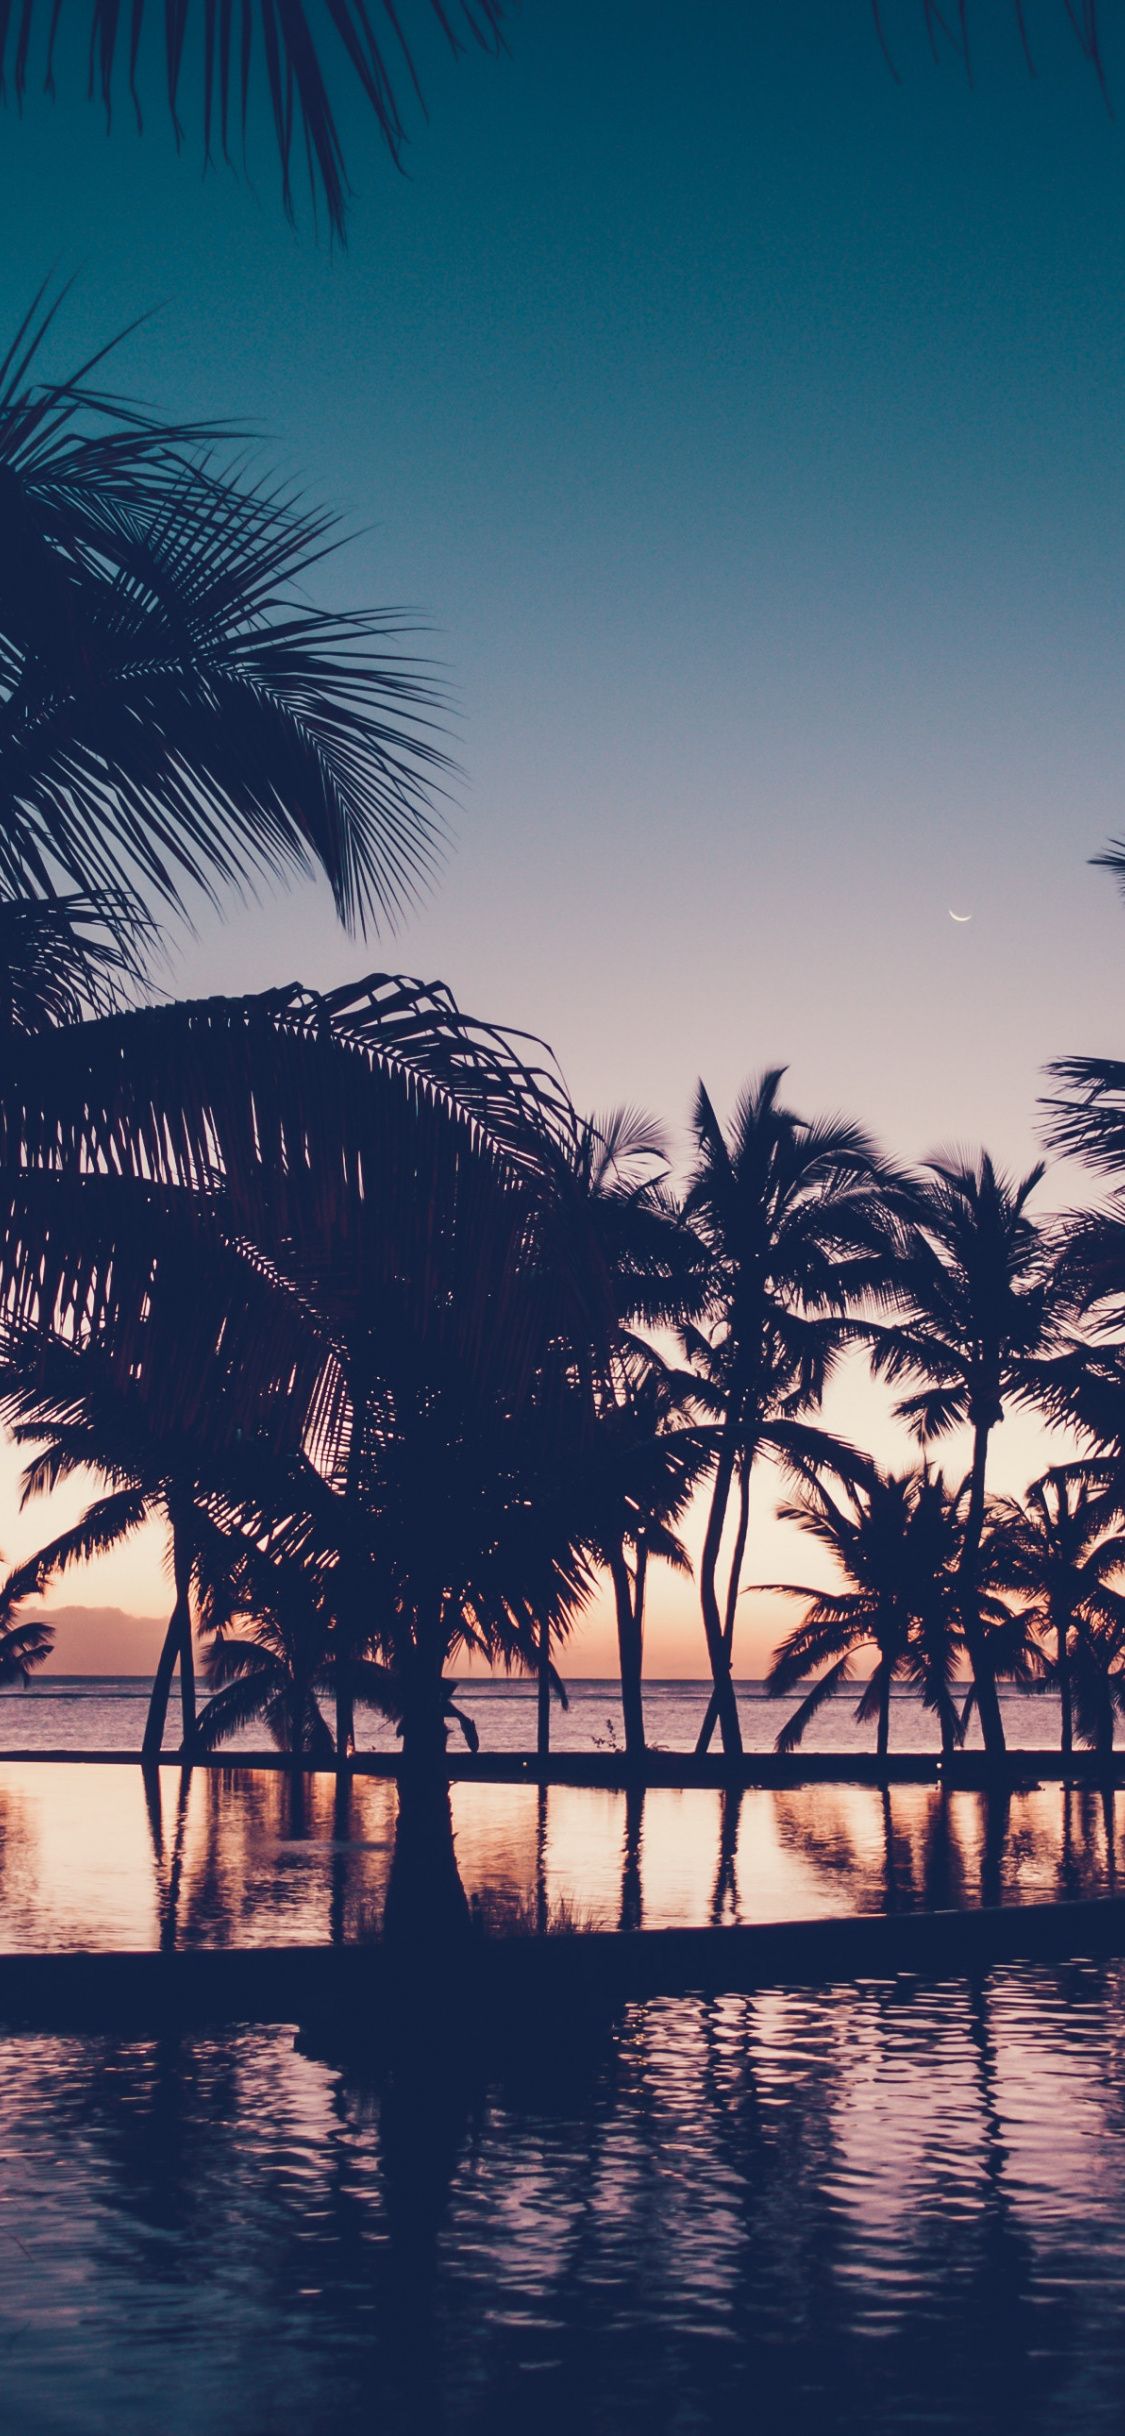 Dawn, dark, sunset, palm tree, resort, reflections wallpaper, 3872x HD image, picture, 79d036fb